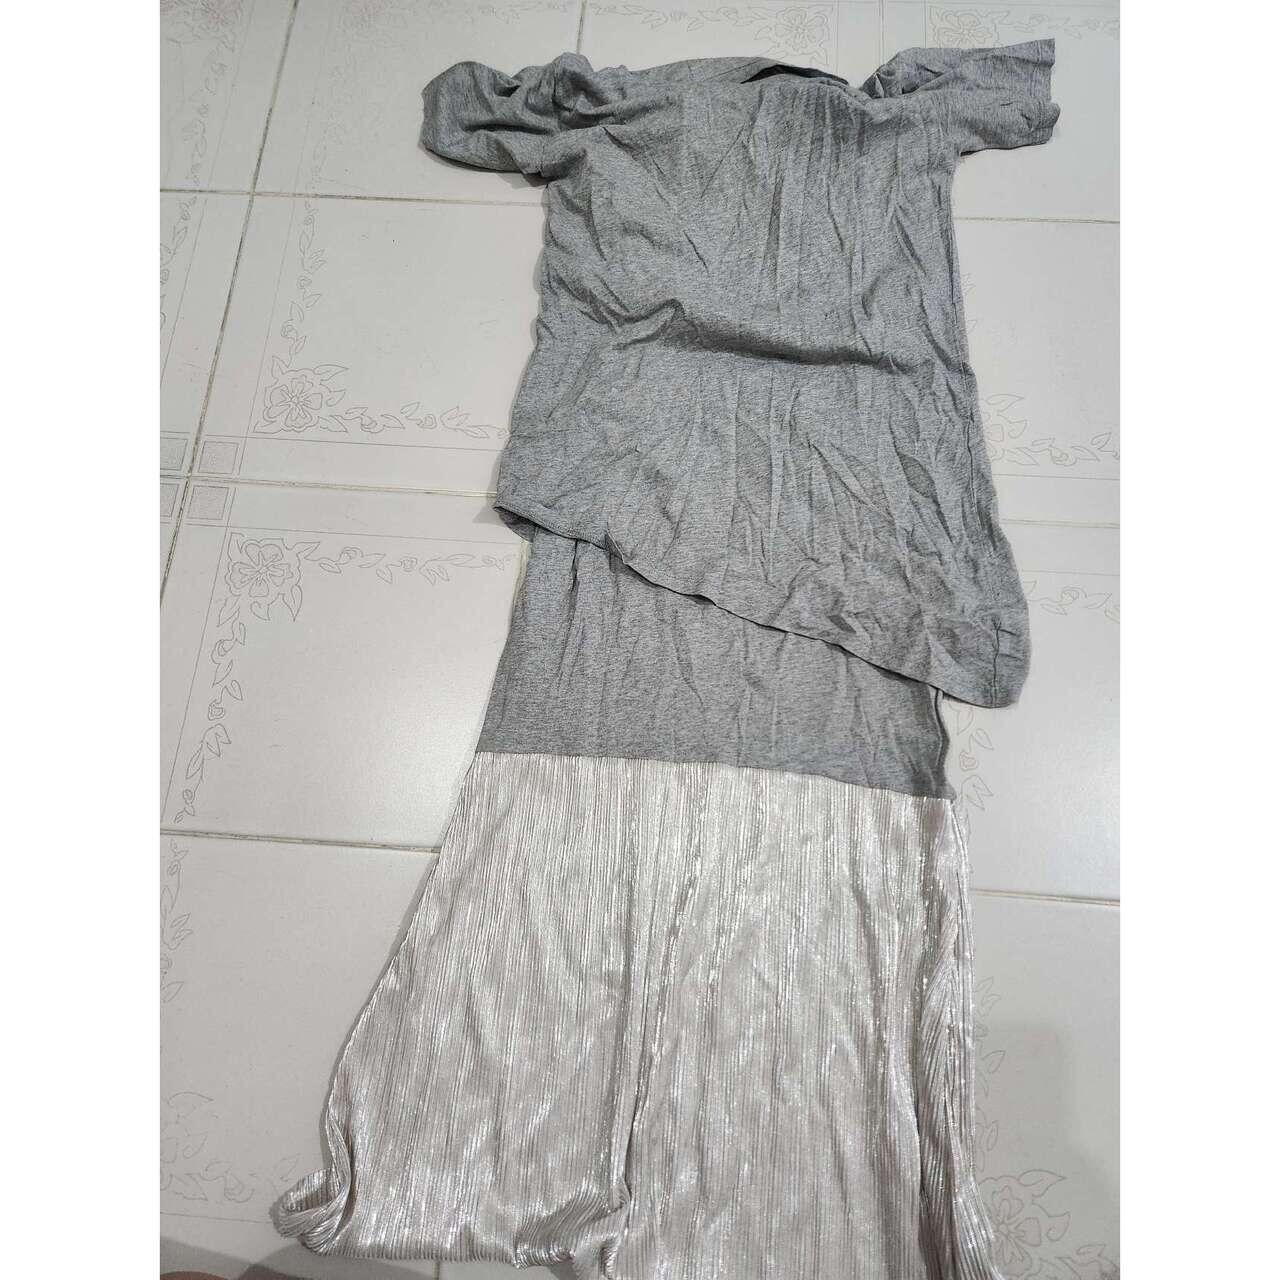 Zara T-Shirt Dress with Skirt Underlay